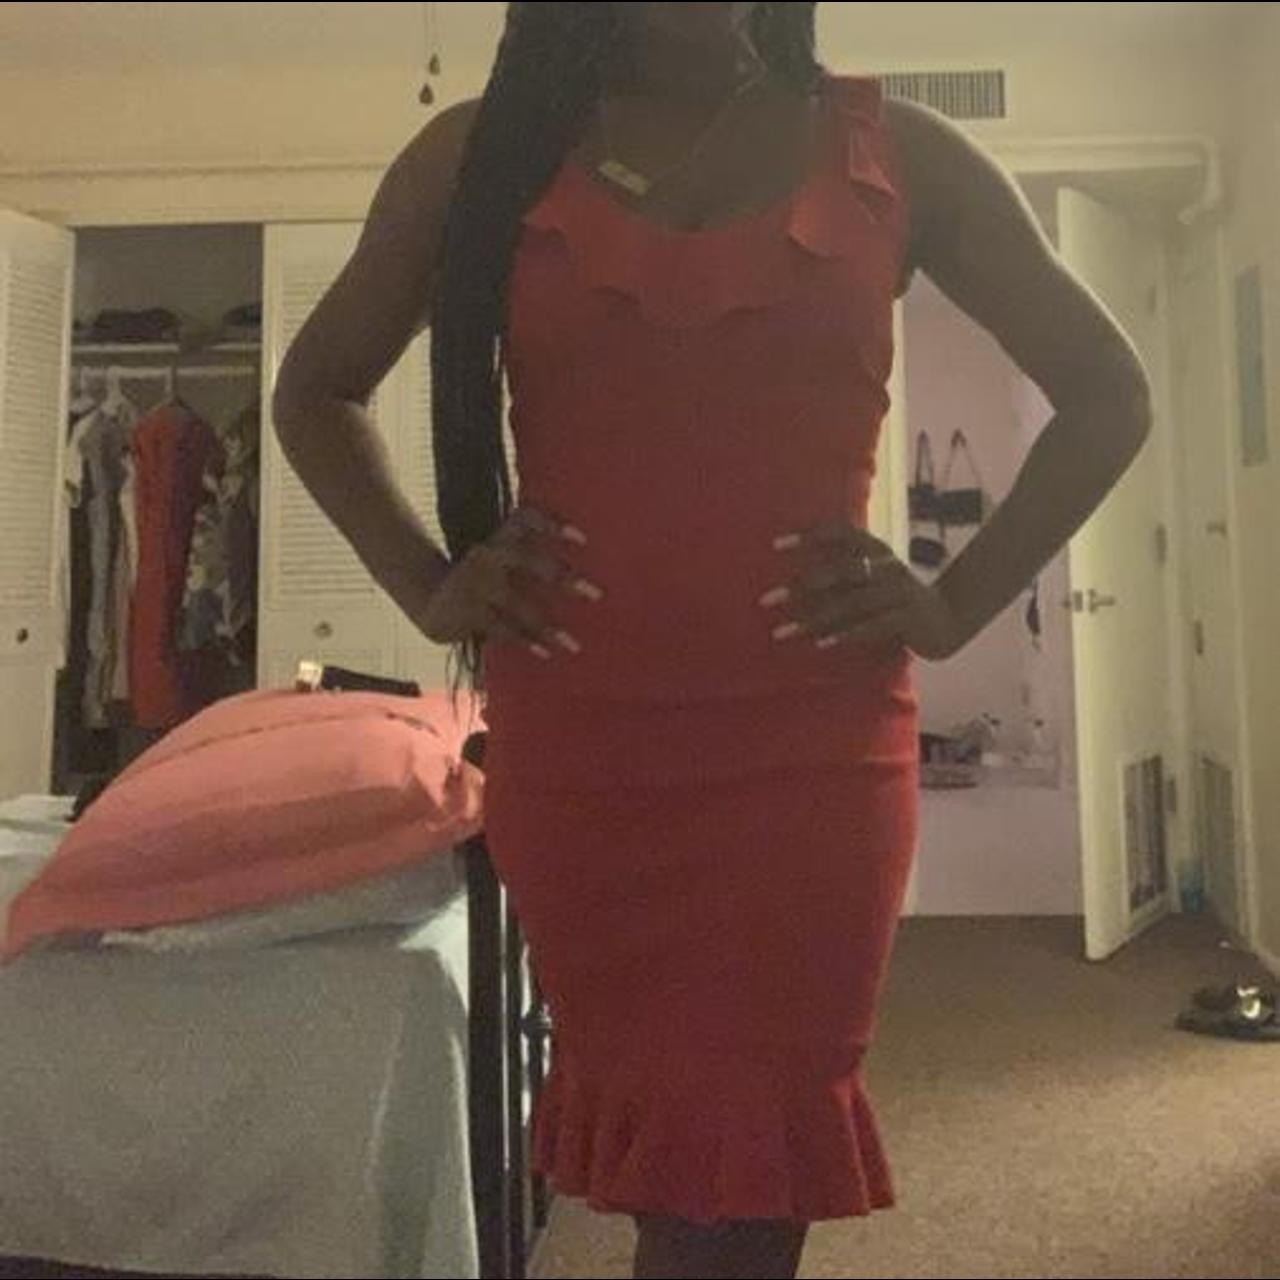 Product Image 2 - 2 Red dress

Bundle dress deal
Taylor